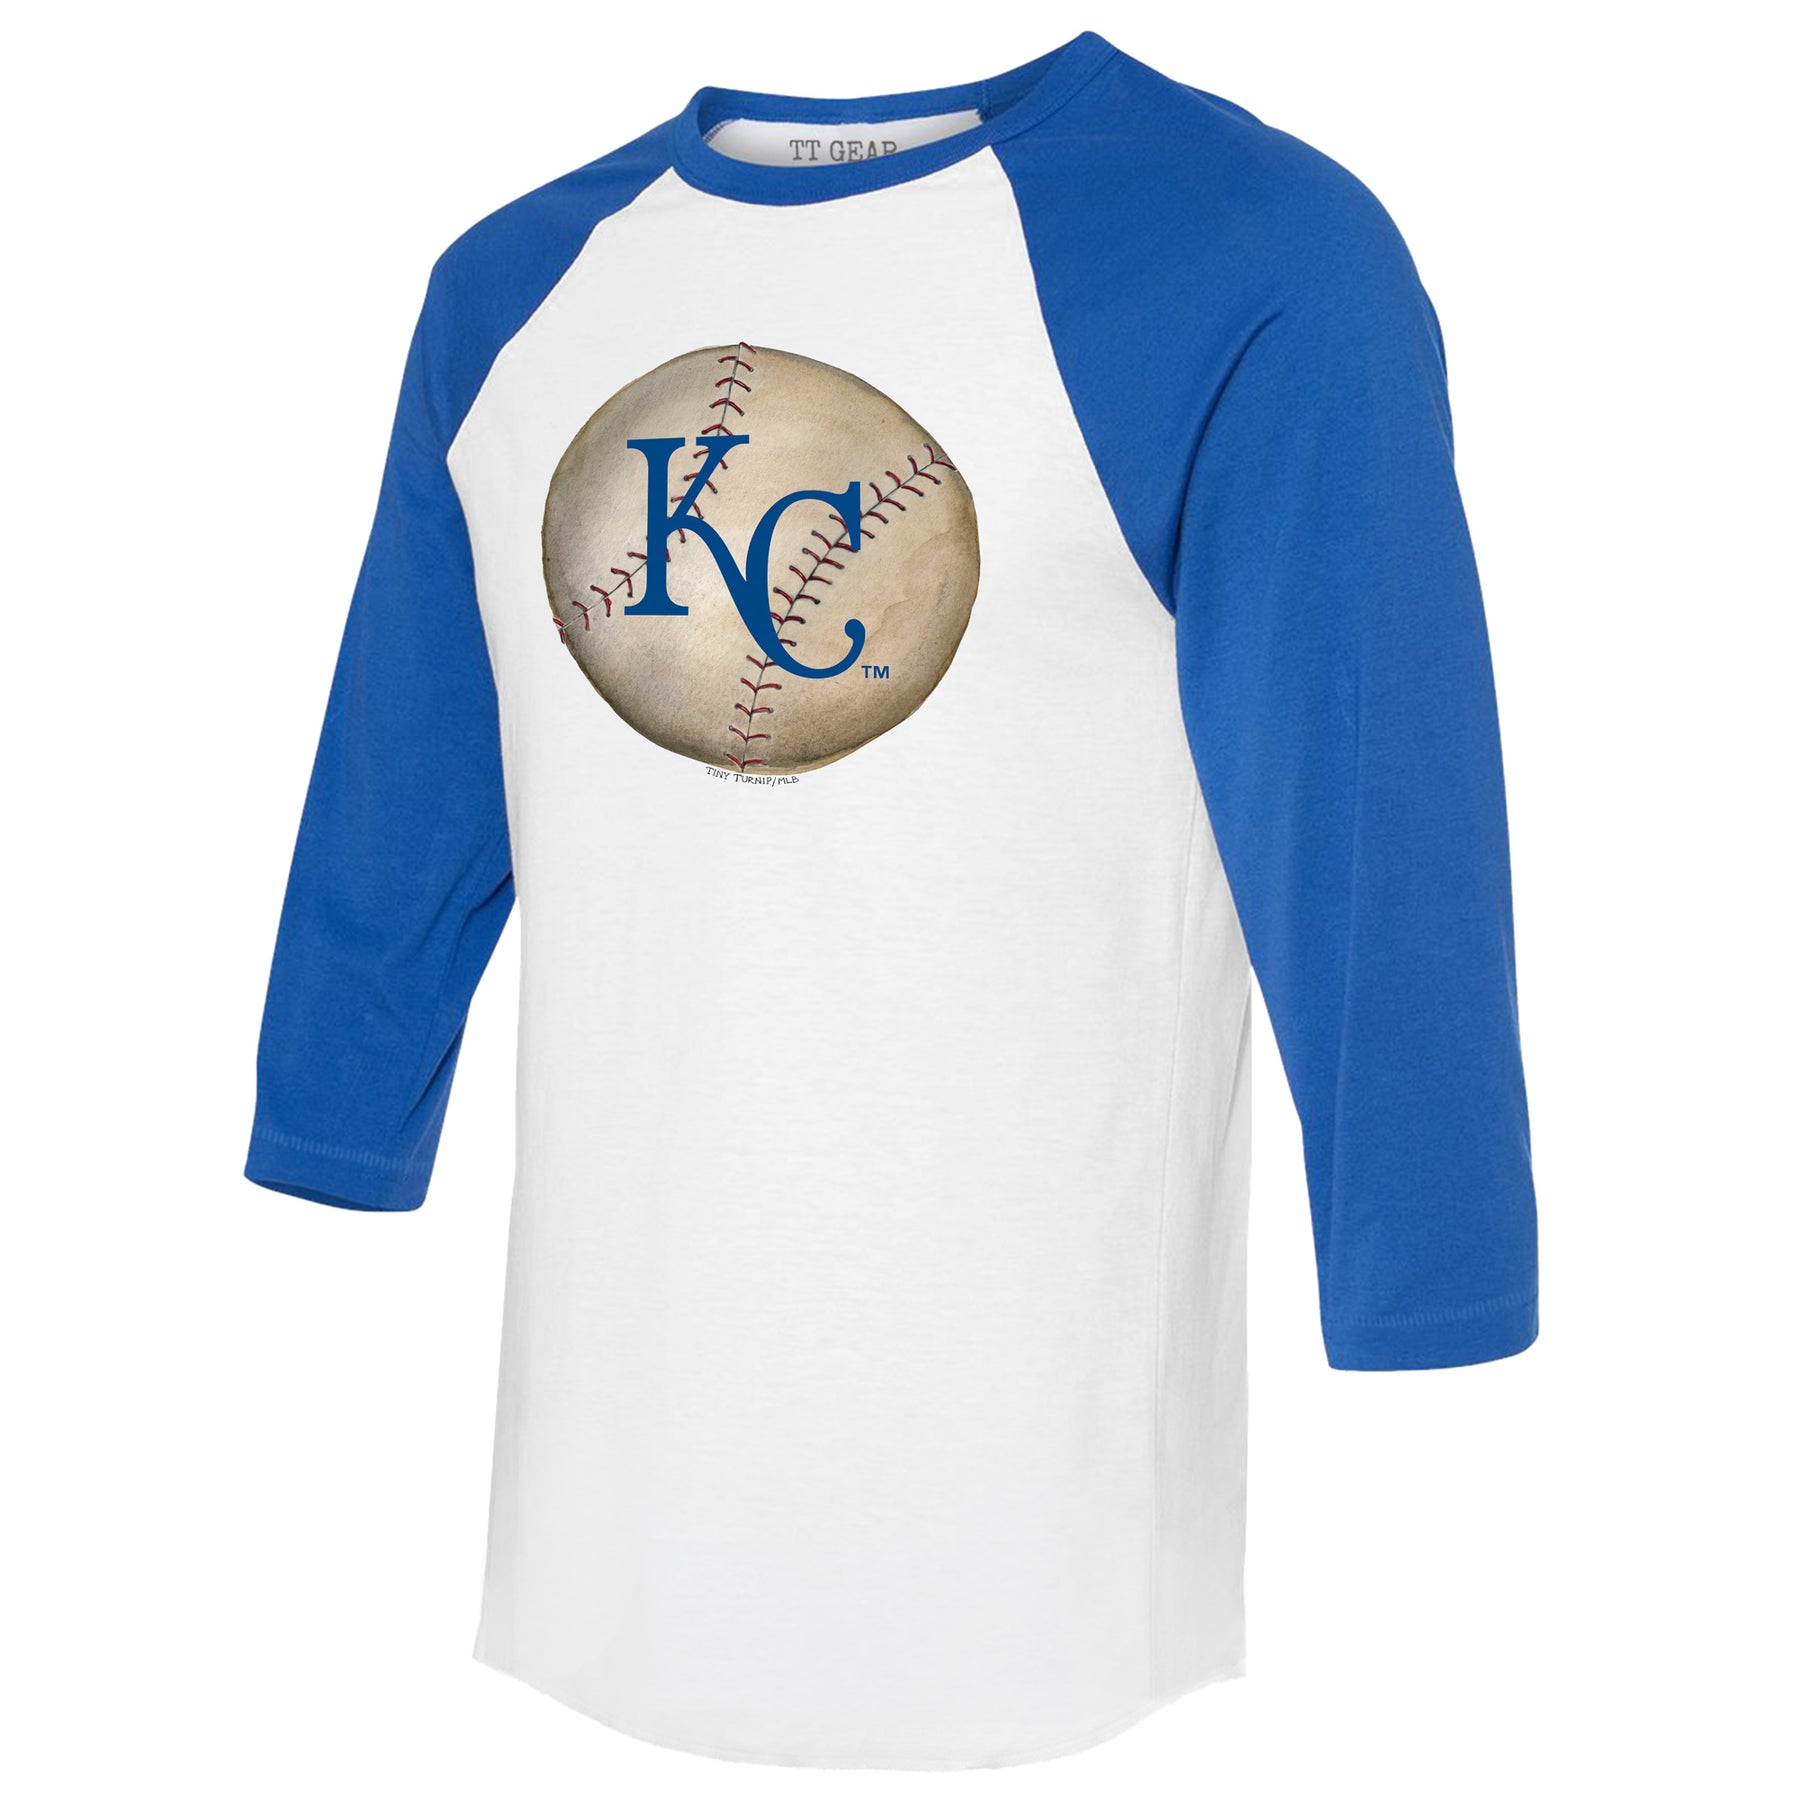 Kansas City Royals Baseball T-shirt Short Sleeve Royal Blue